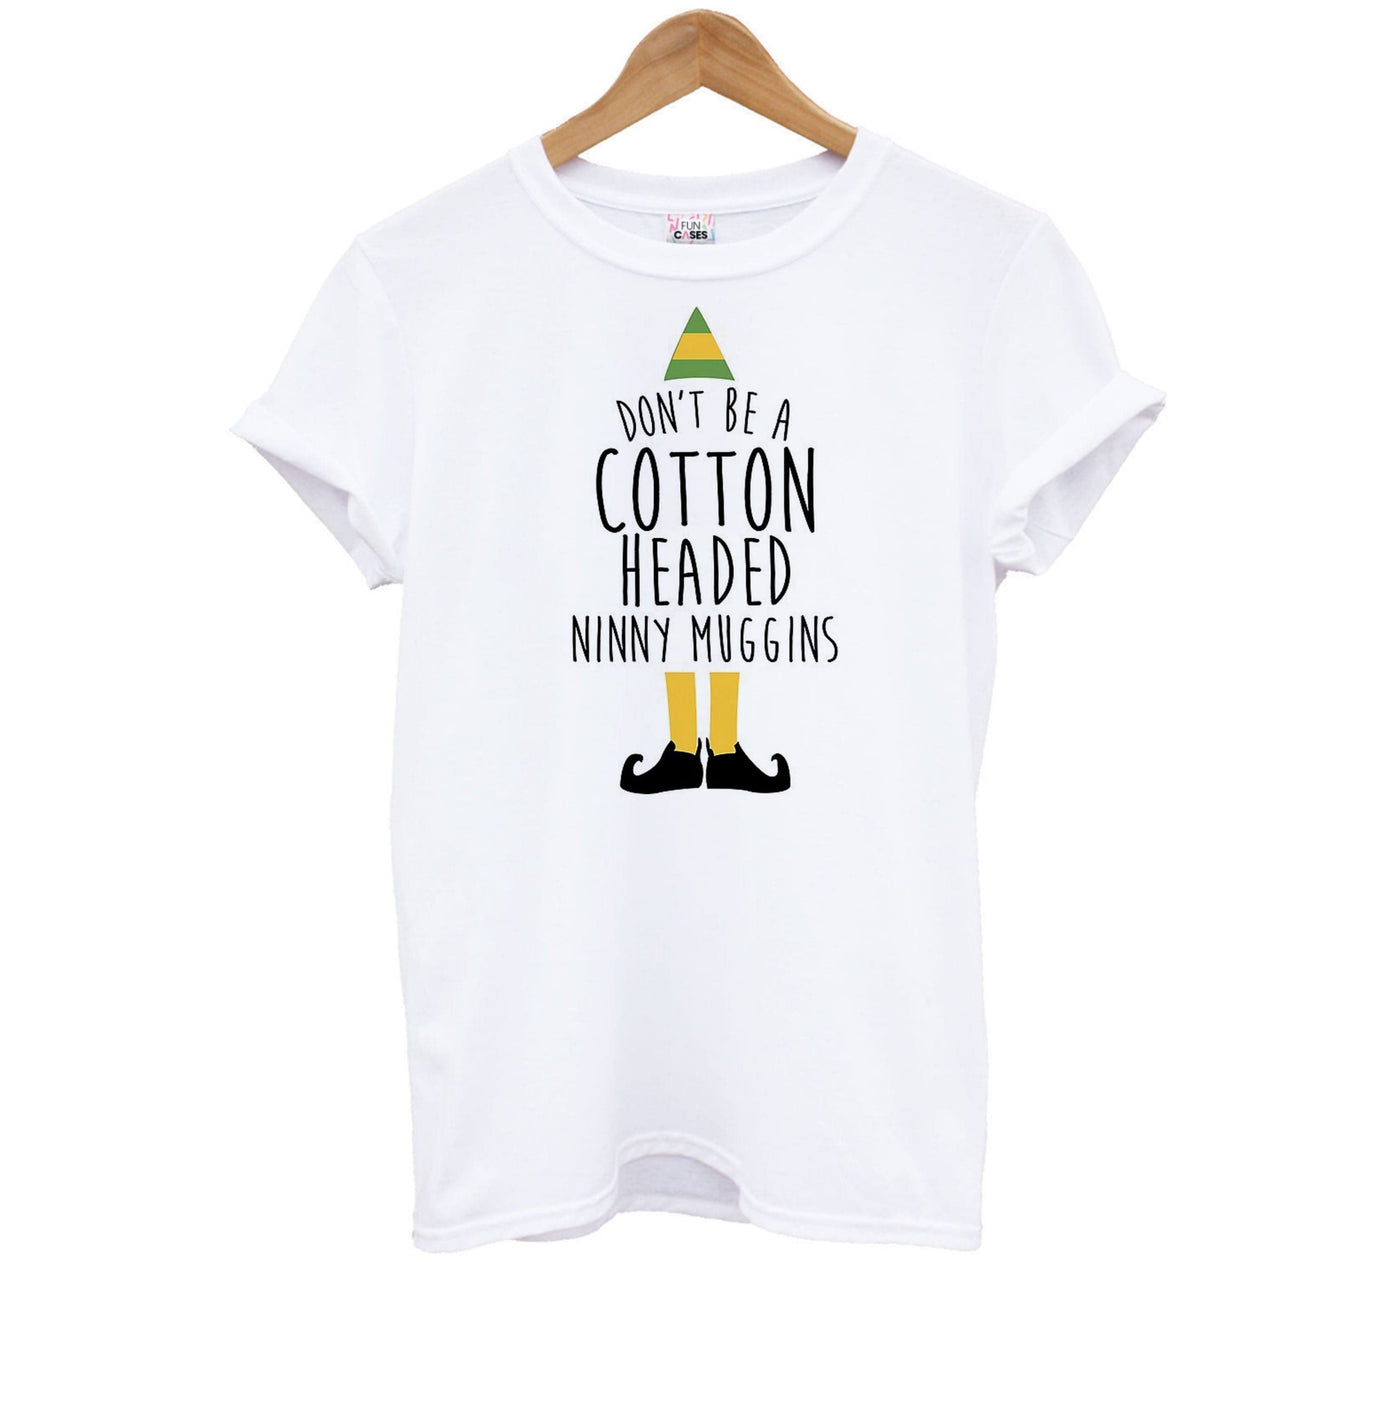 Cotton Headed Ninny Muggins - Buddy The Elf Kids T-Shirt